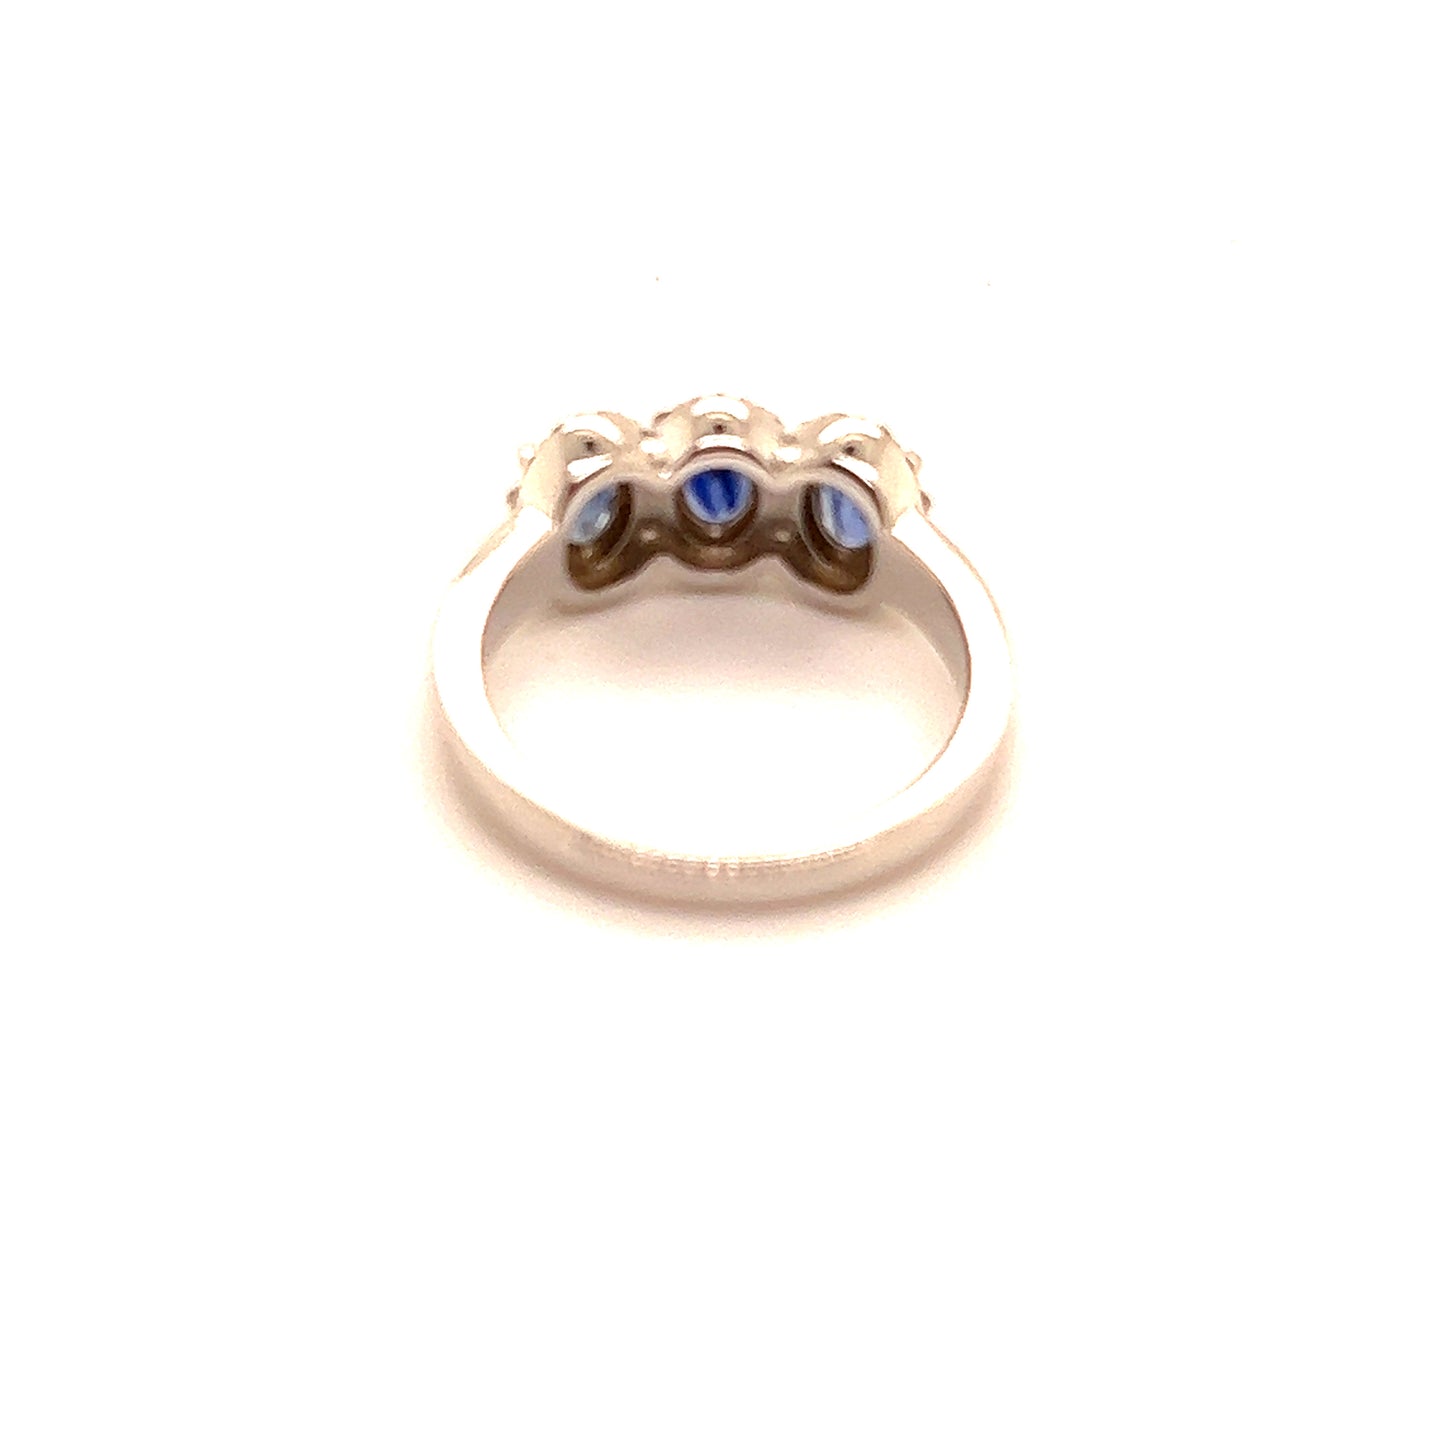 Natural Sapphire Diamond Ring 7 14k W Gold 1.67 TCW Certified $4,975 218113 - Certified Fine Jewelry